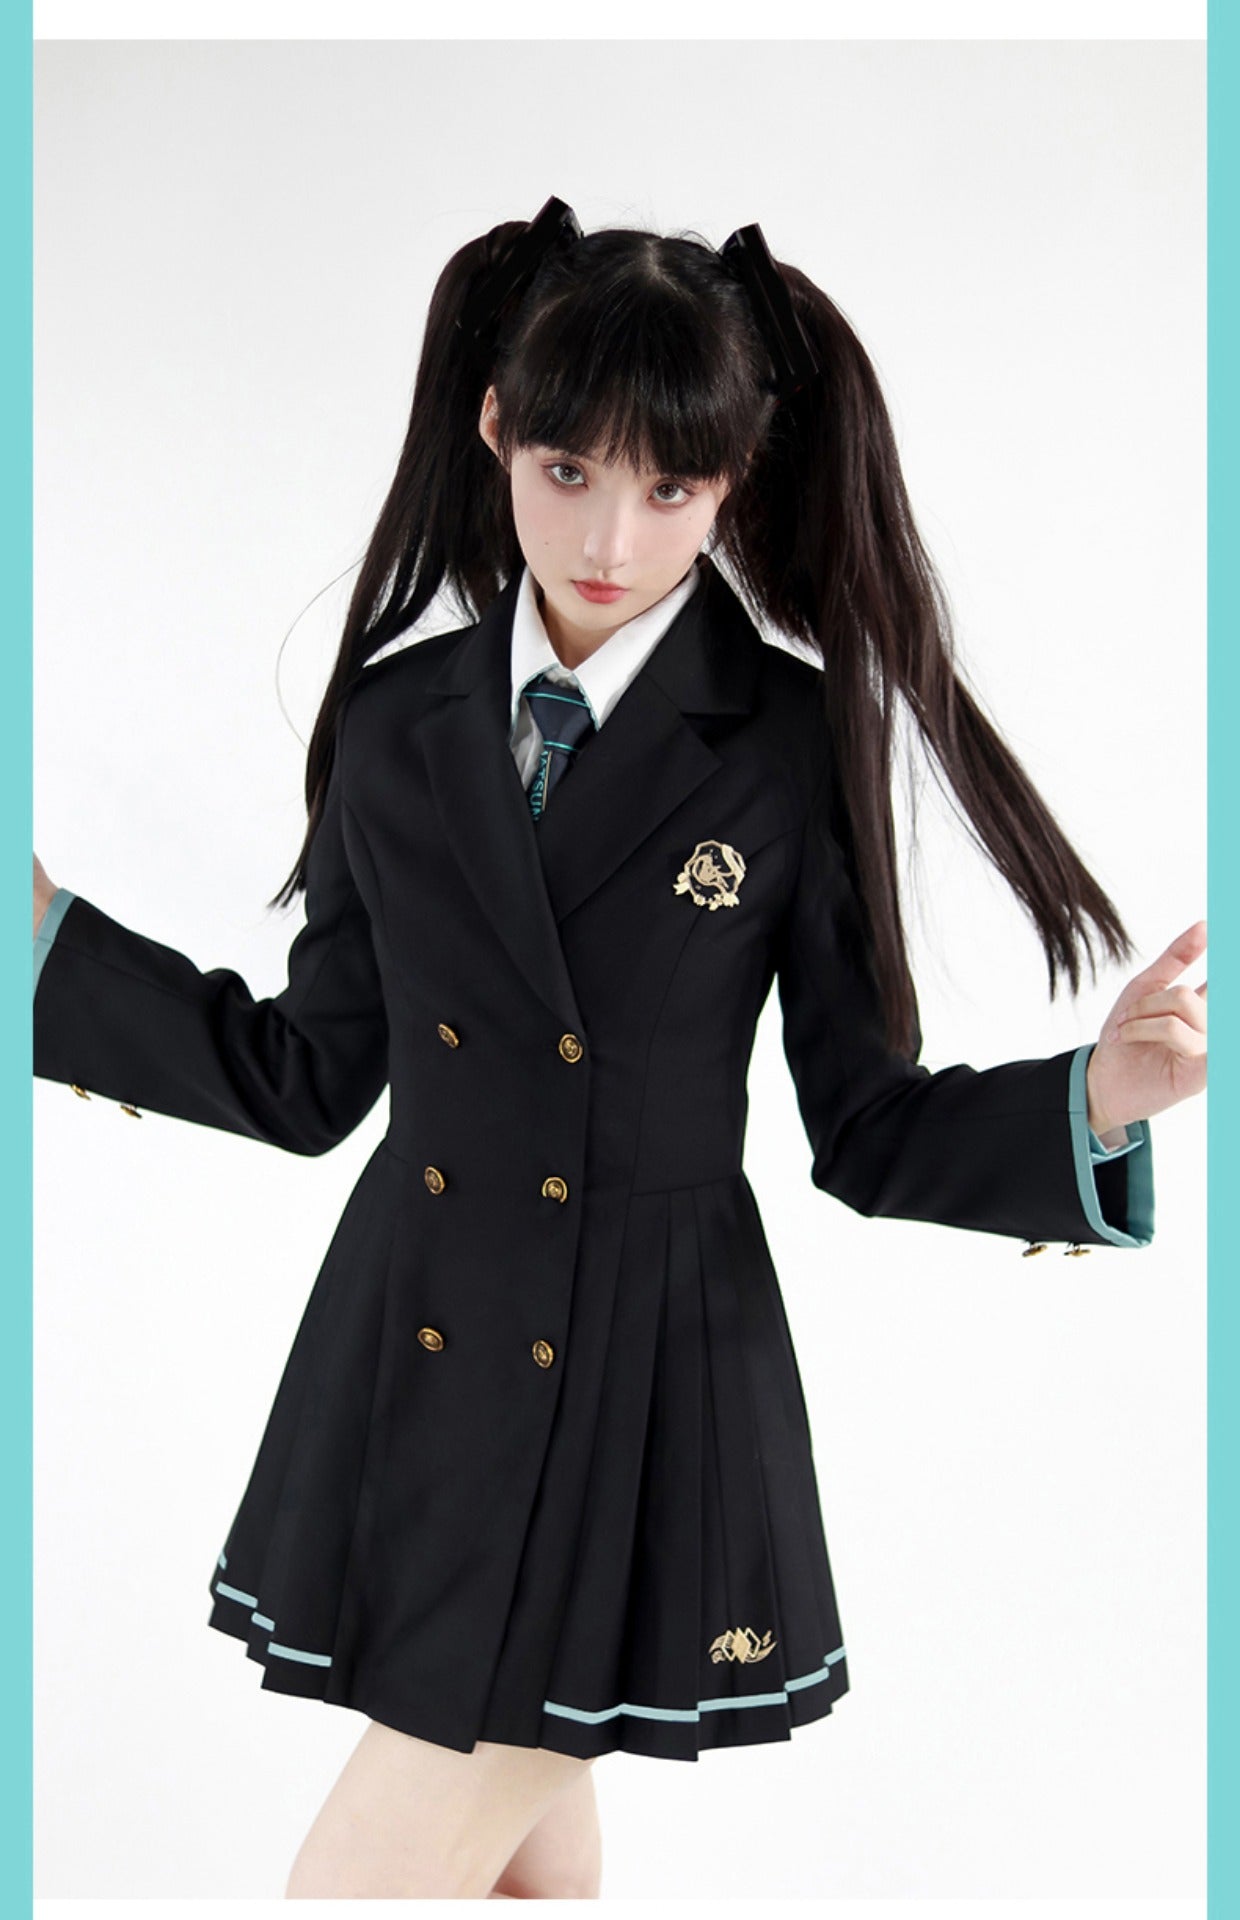 Anime Girl In A Blazer by NepthysArts on DeviantArt